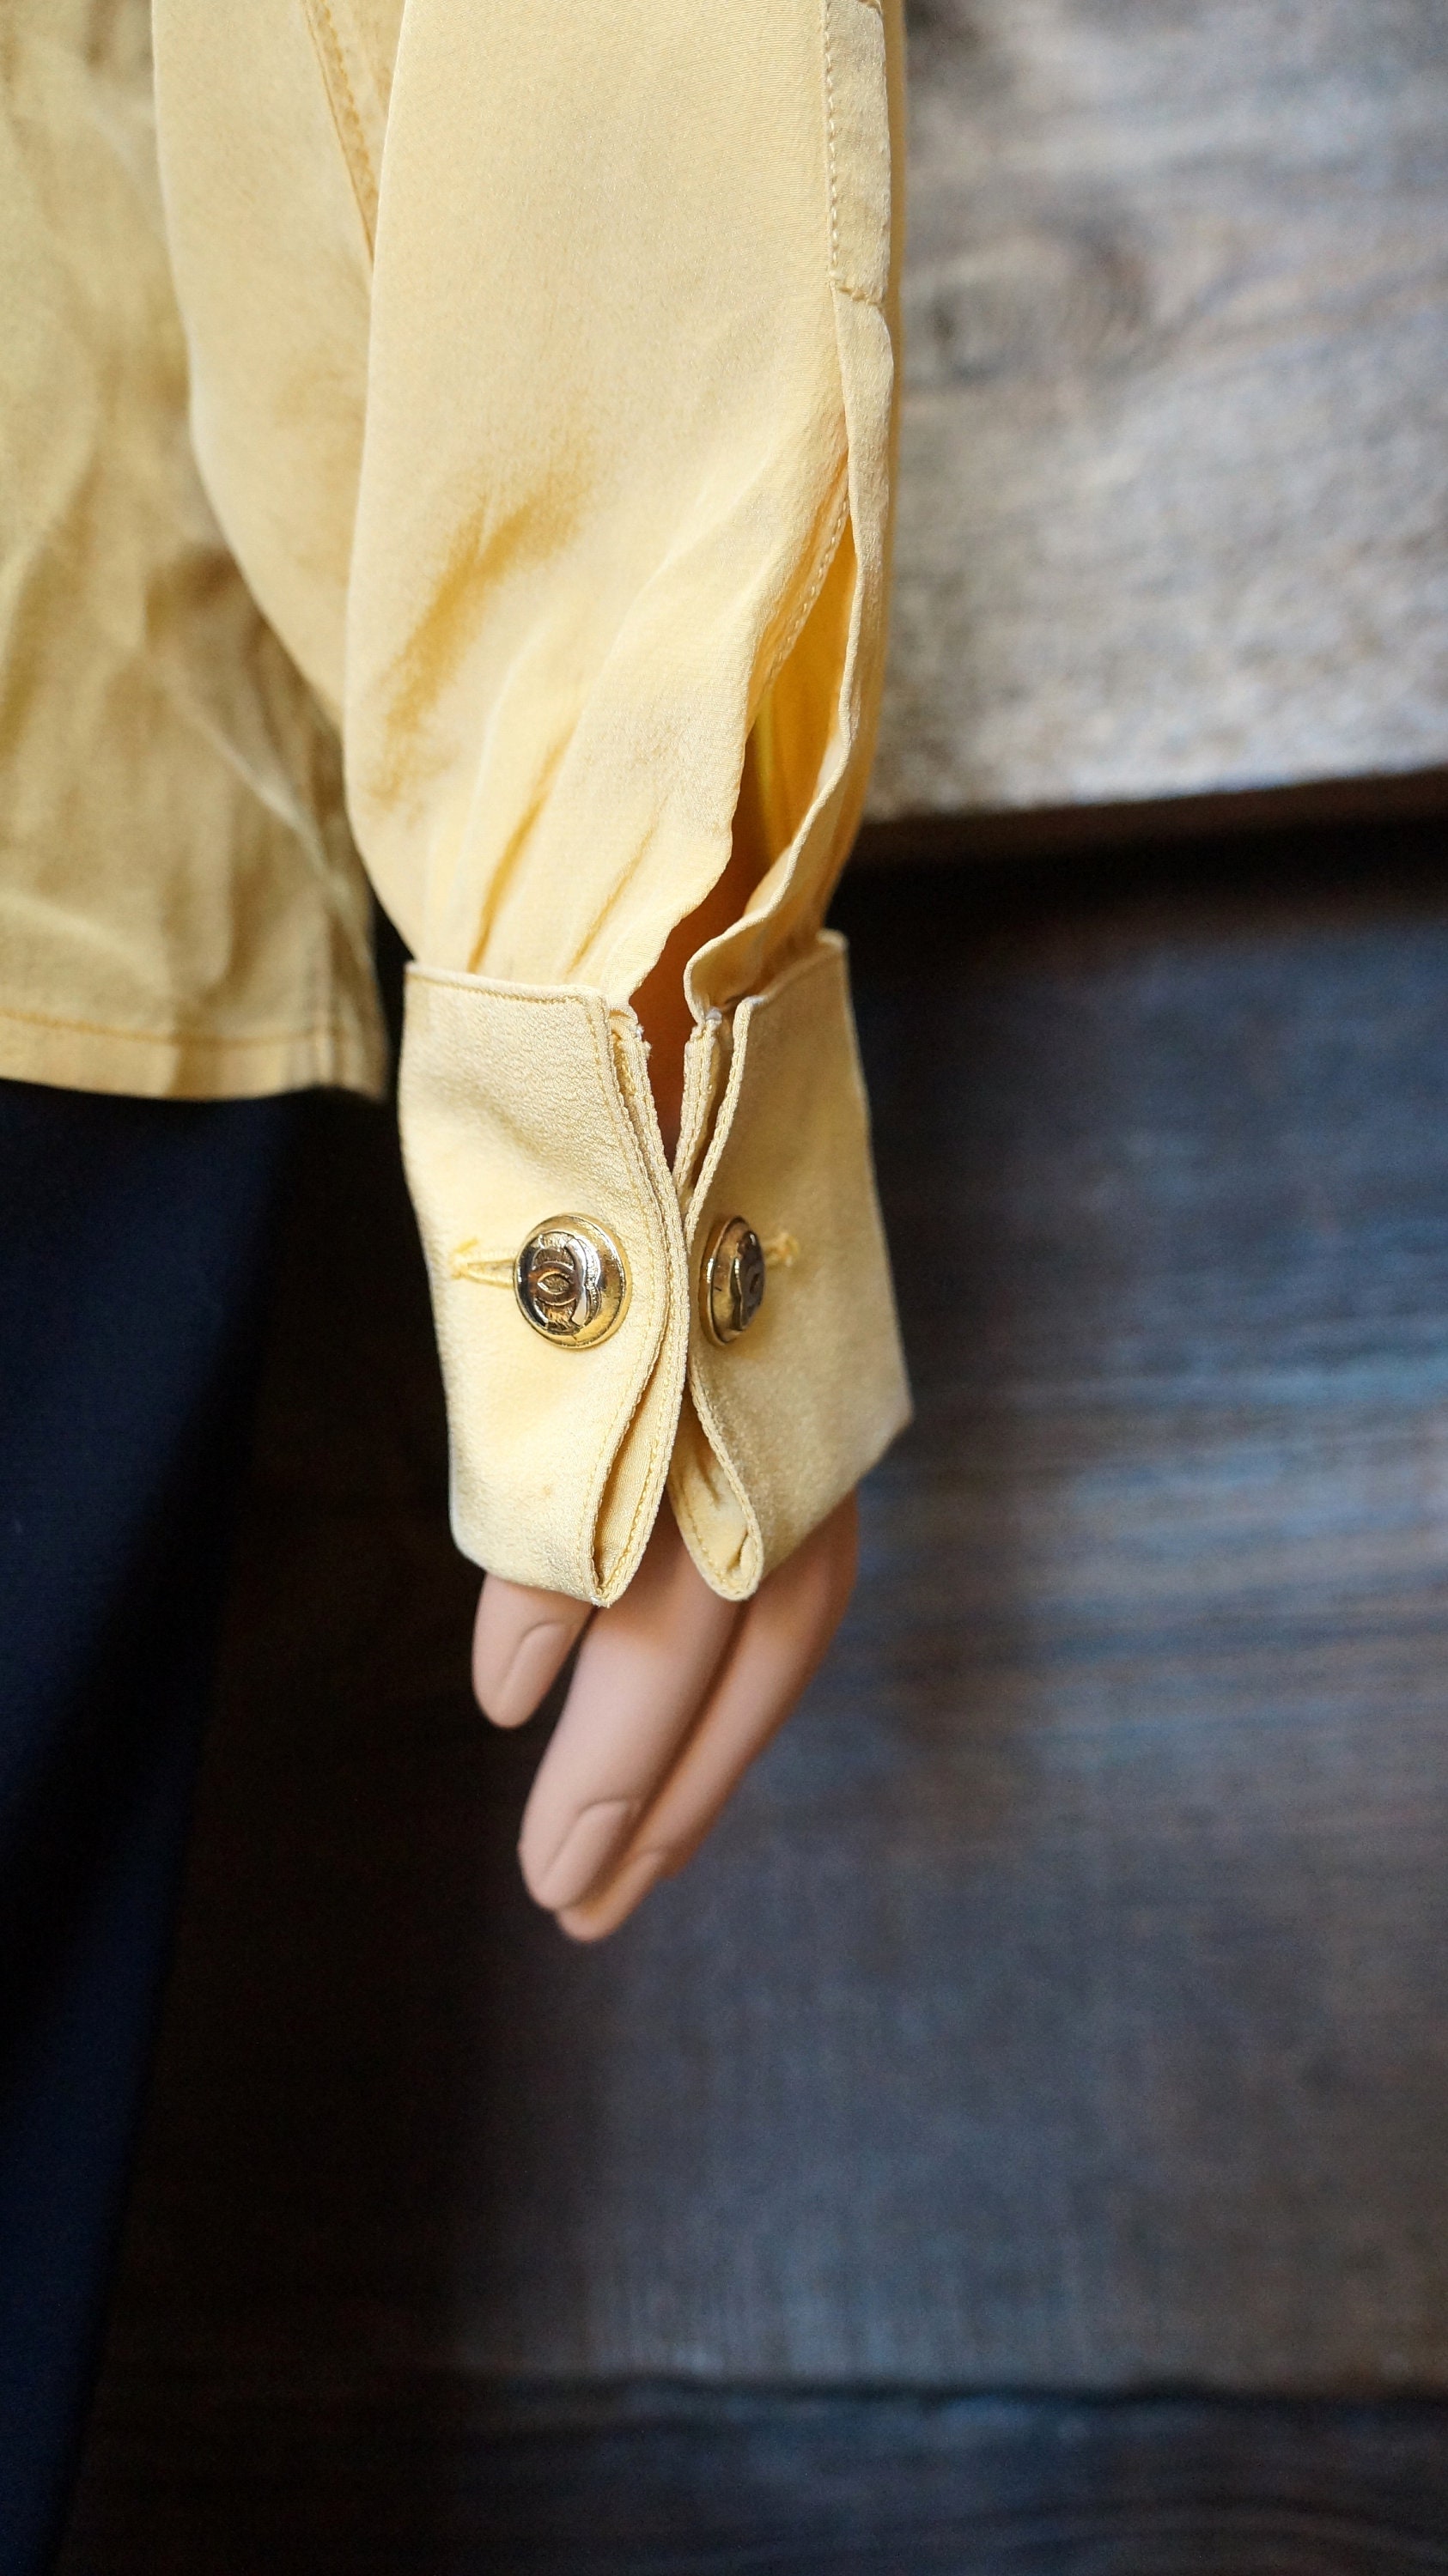 Vintage Chanel Blouse Silk Shirt Yellow Shirt Blouse Pleats 